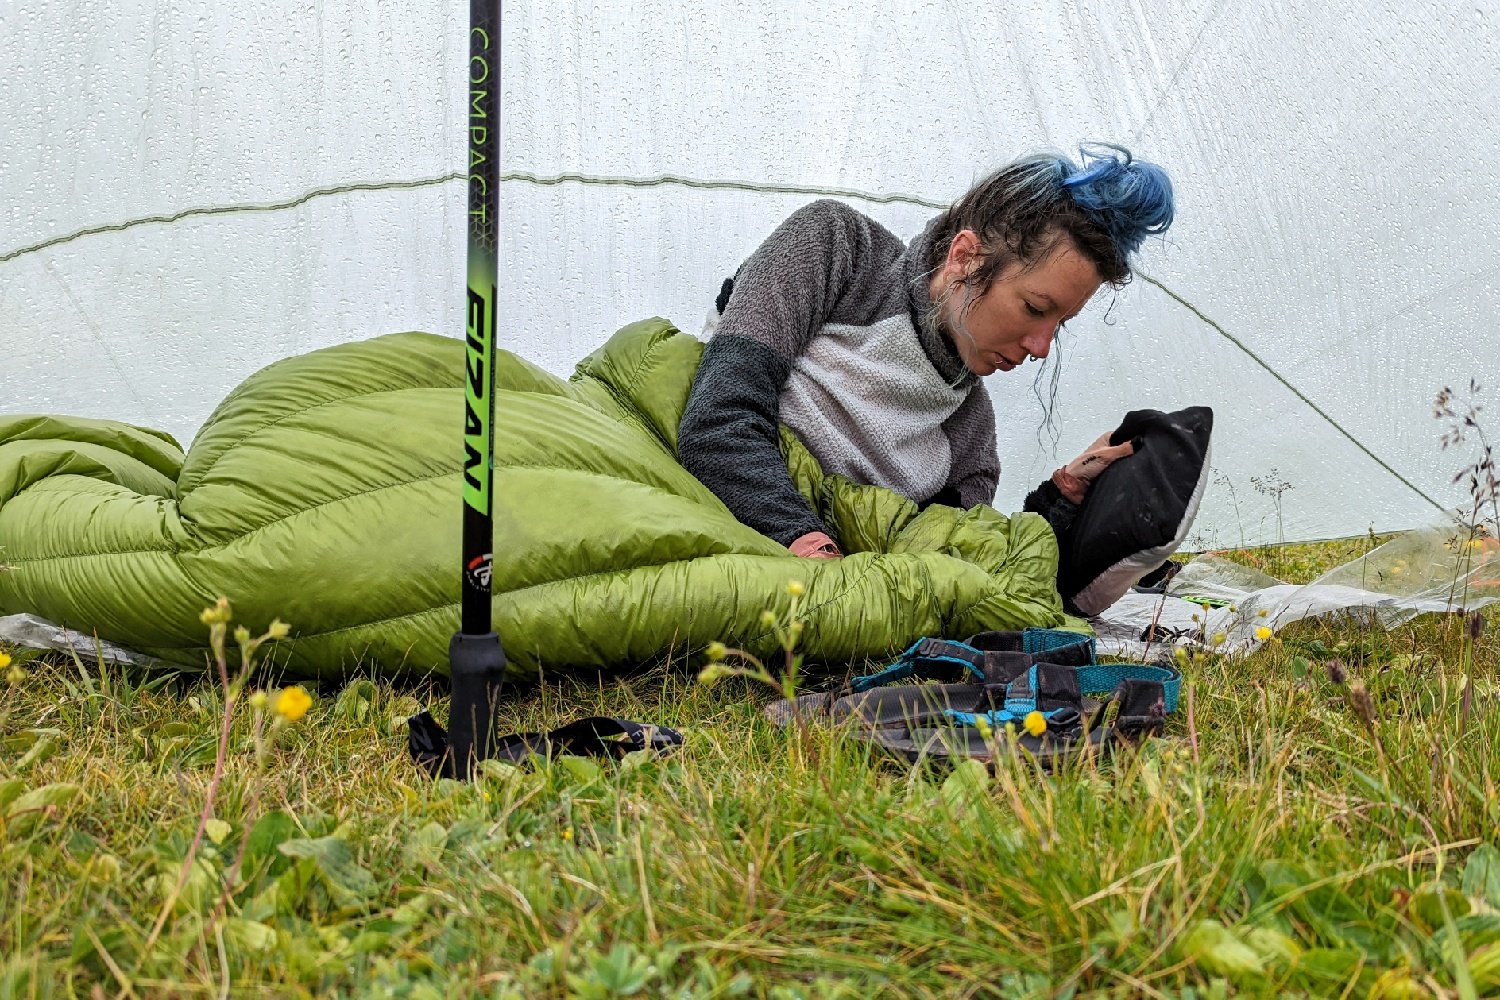 Western Mountaineering AlpinLite - Down sleeping bag | Free EU Delivery |  Bergfreunde.eu